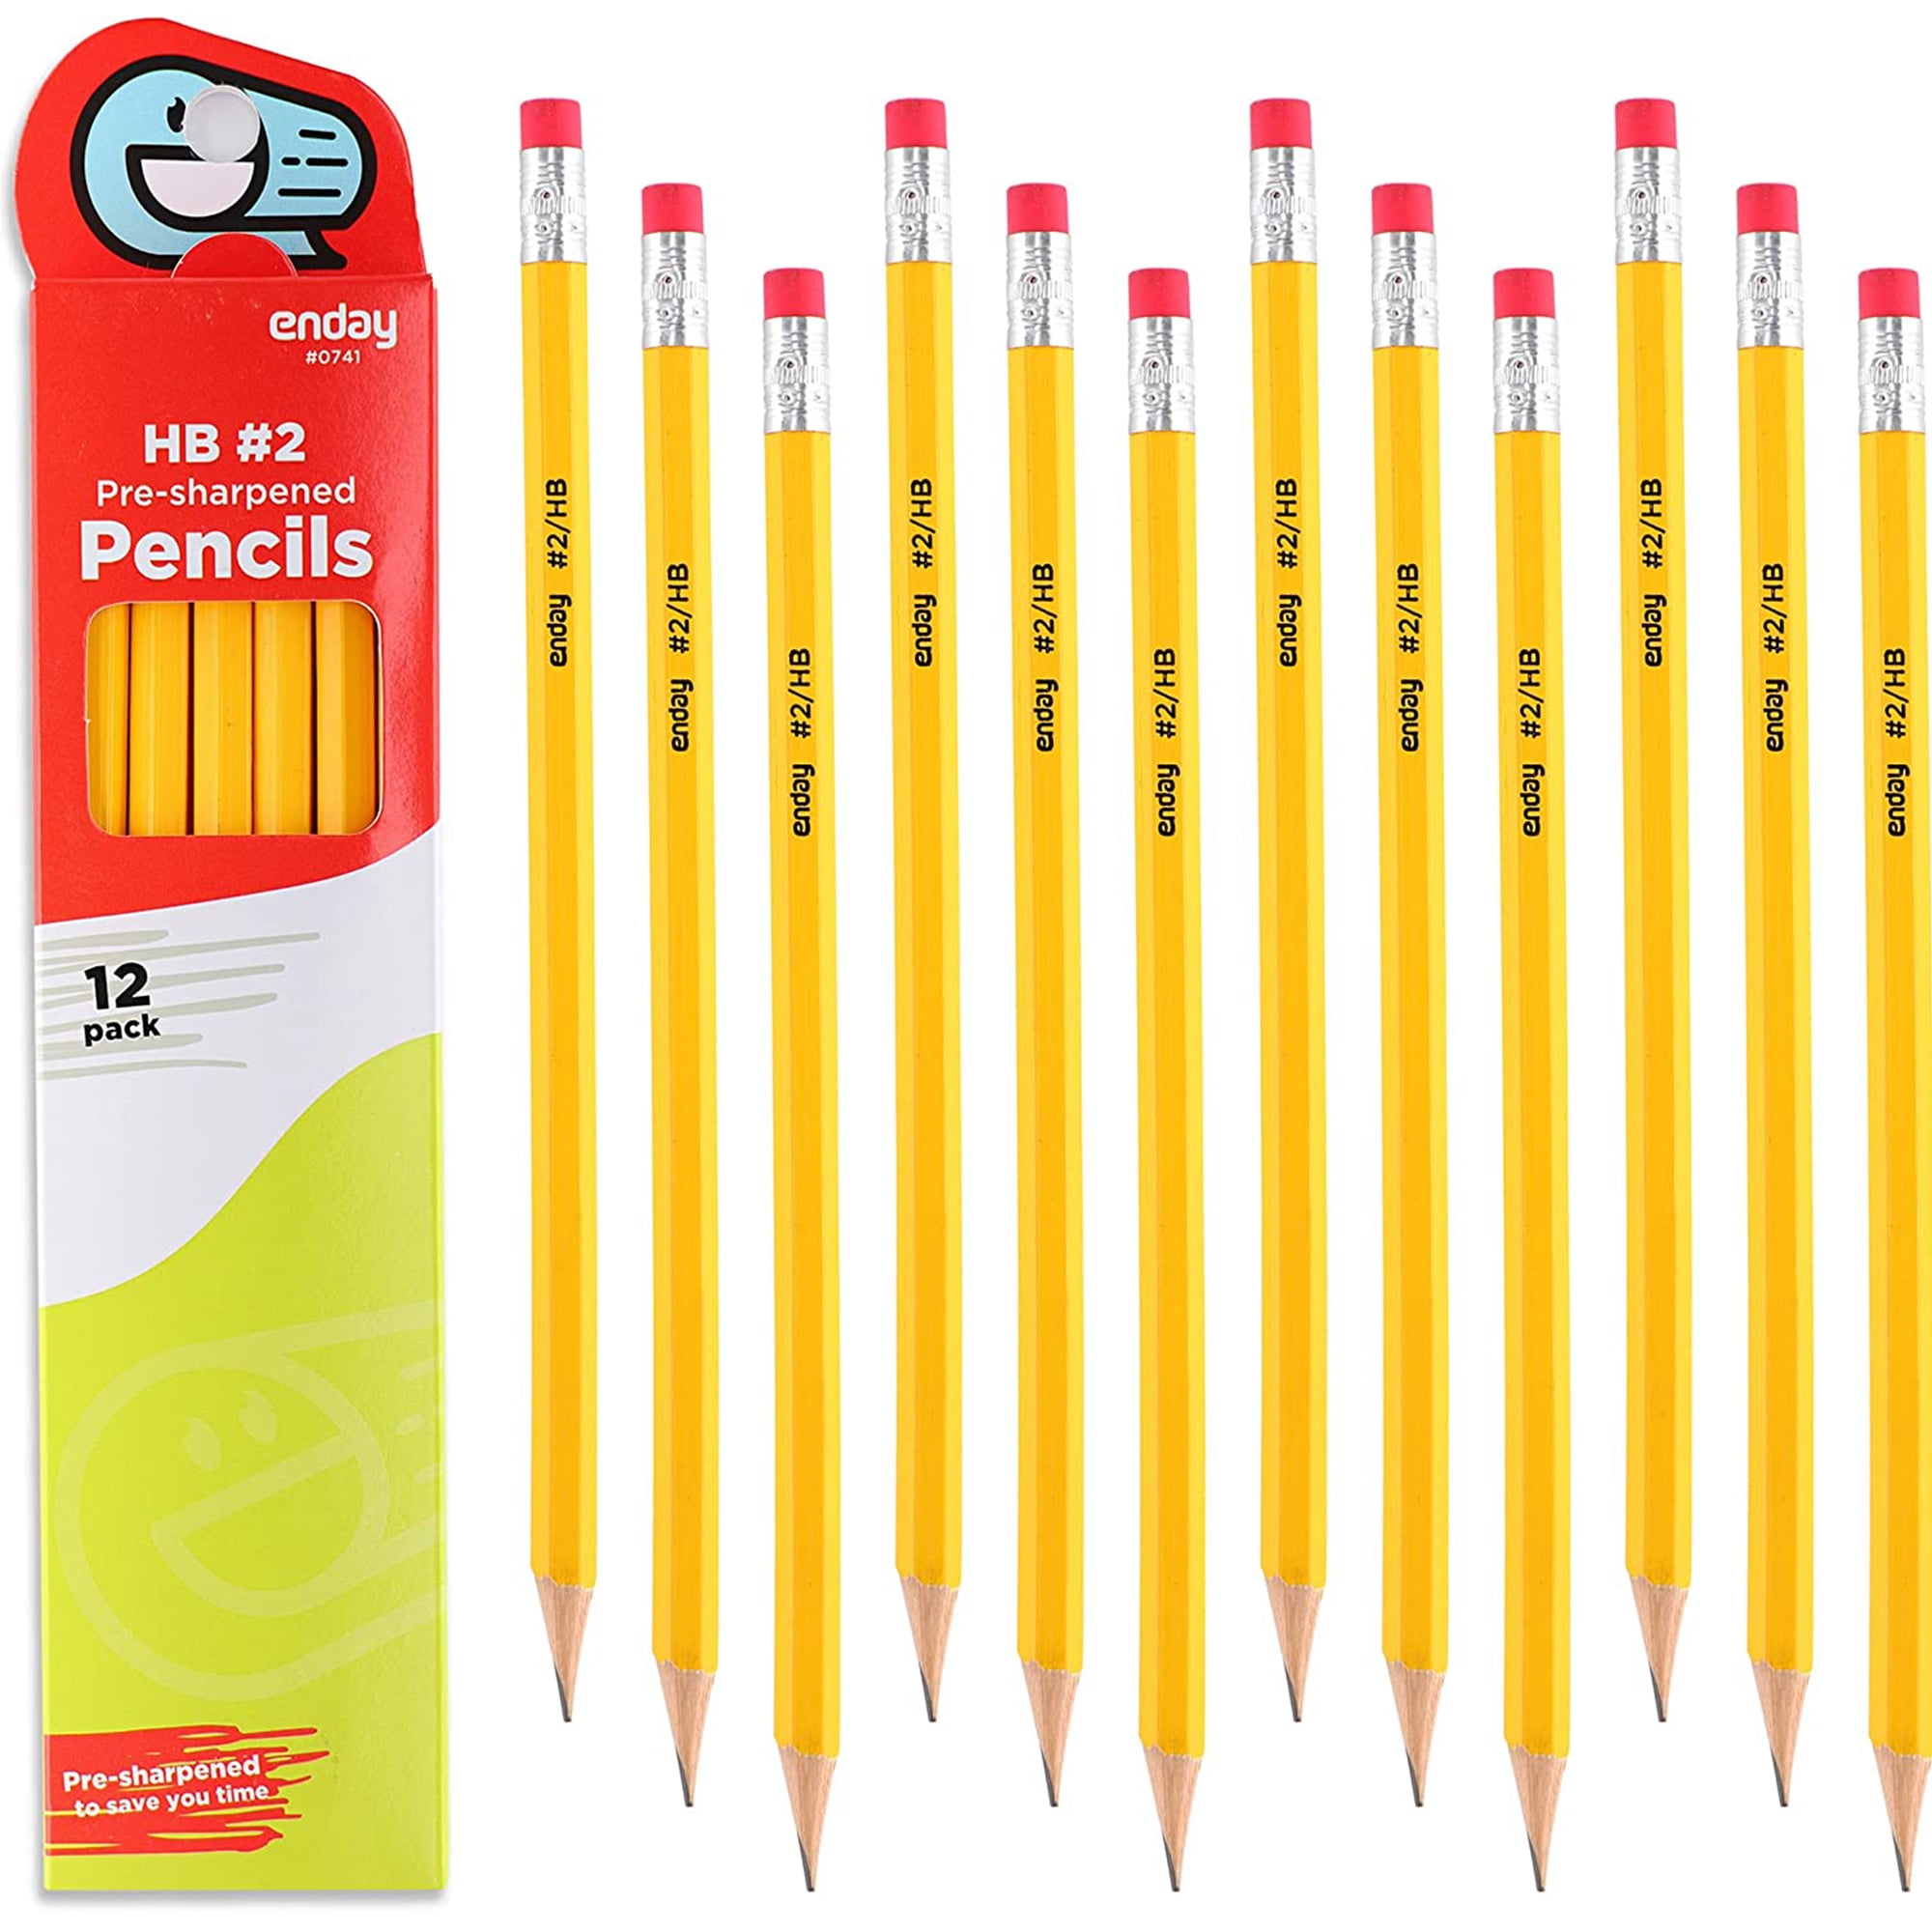 Naler Happy Birthday Pencils 100 Count for Students Bulk,Birthday